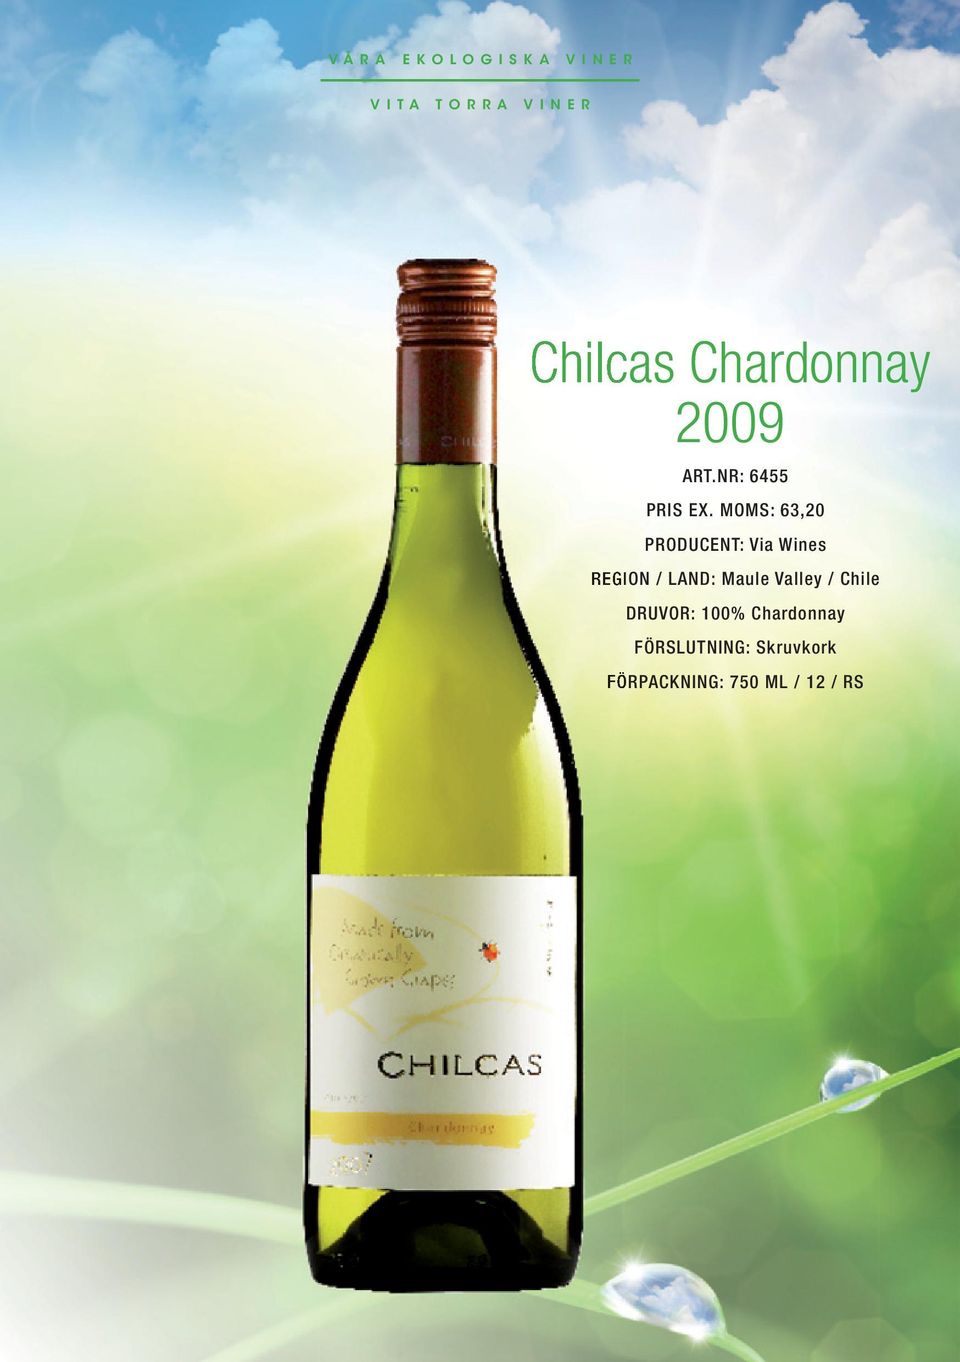 Maule Valley / Chile DRUVOR: 100% Chardonnay